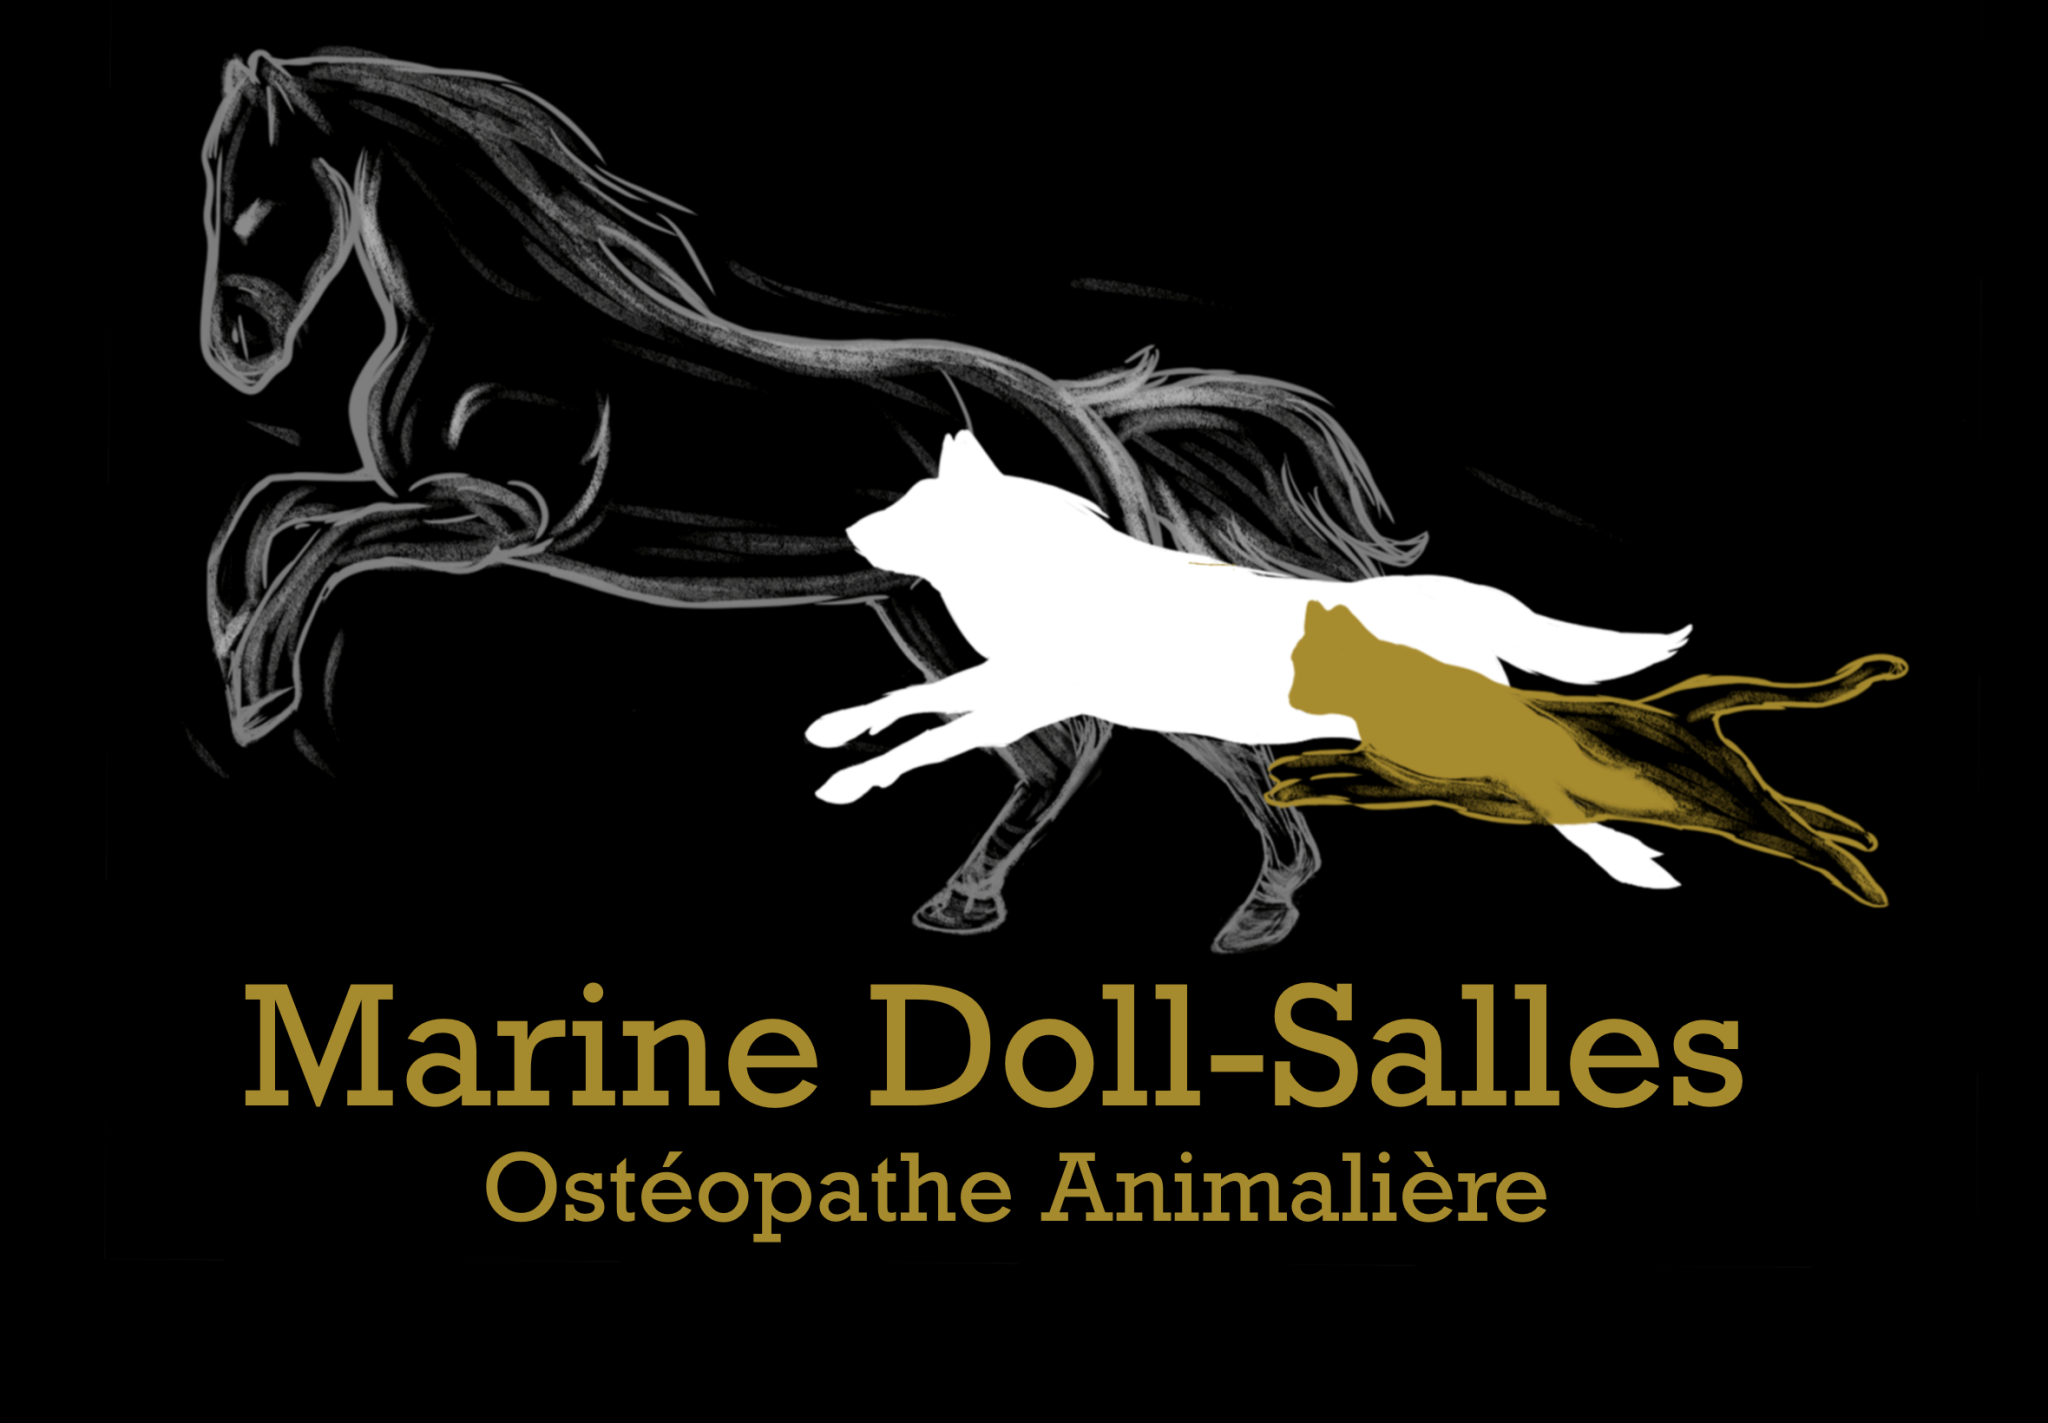 Marine Doll-Salles